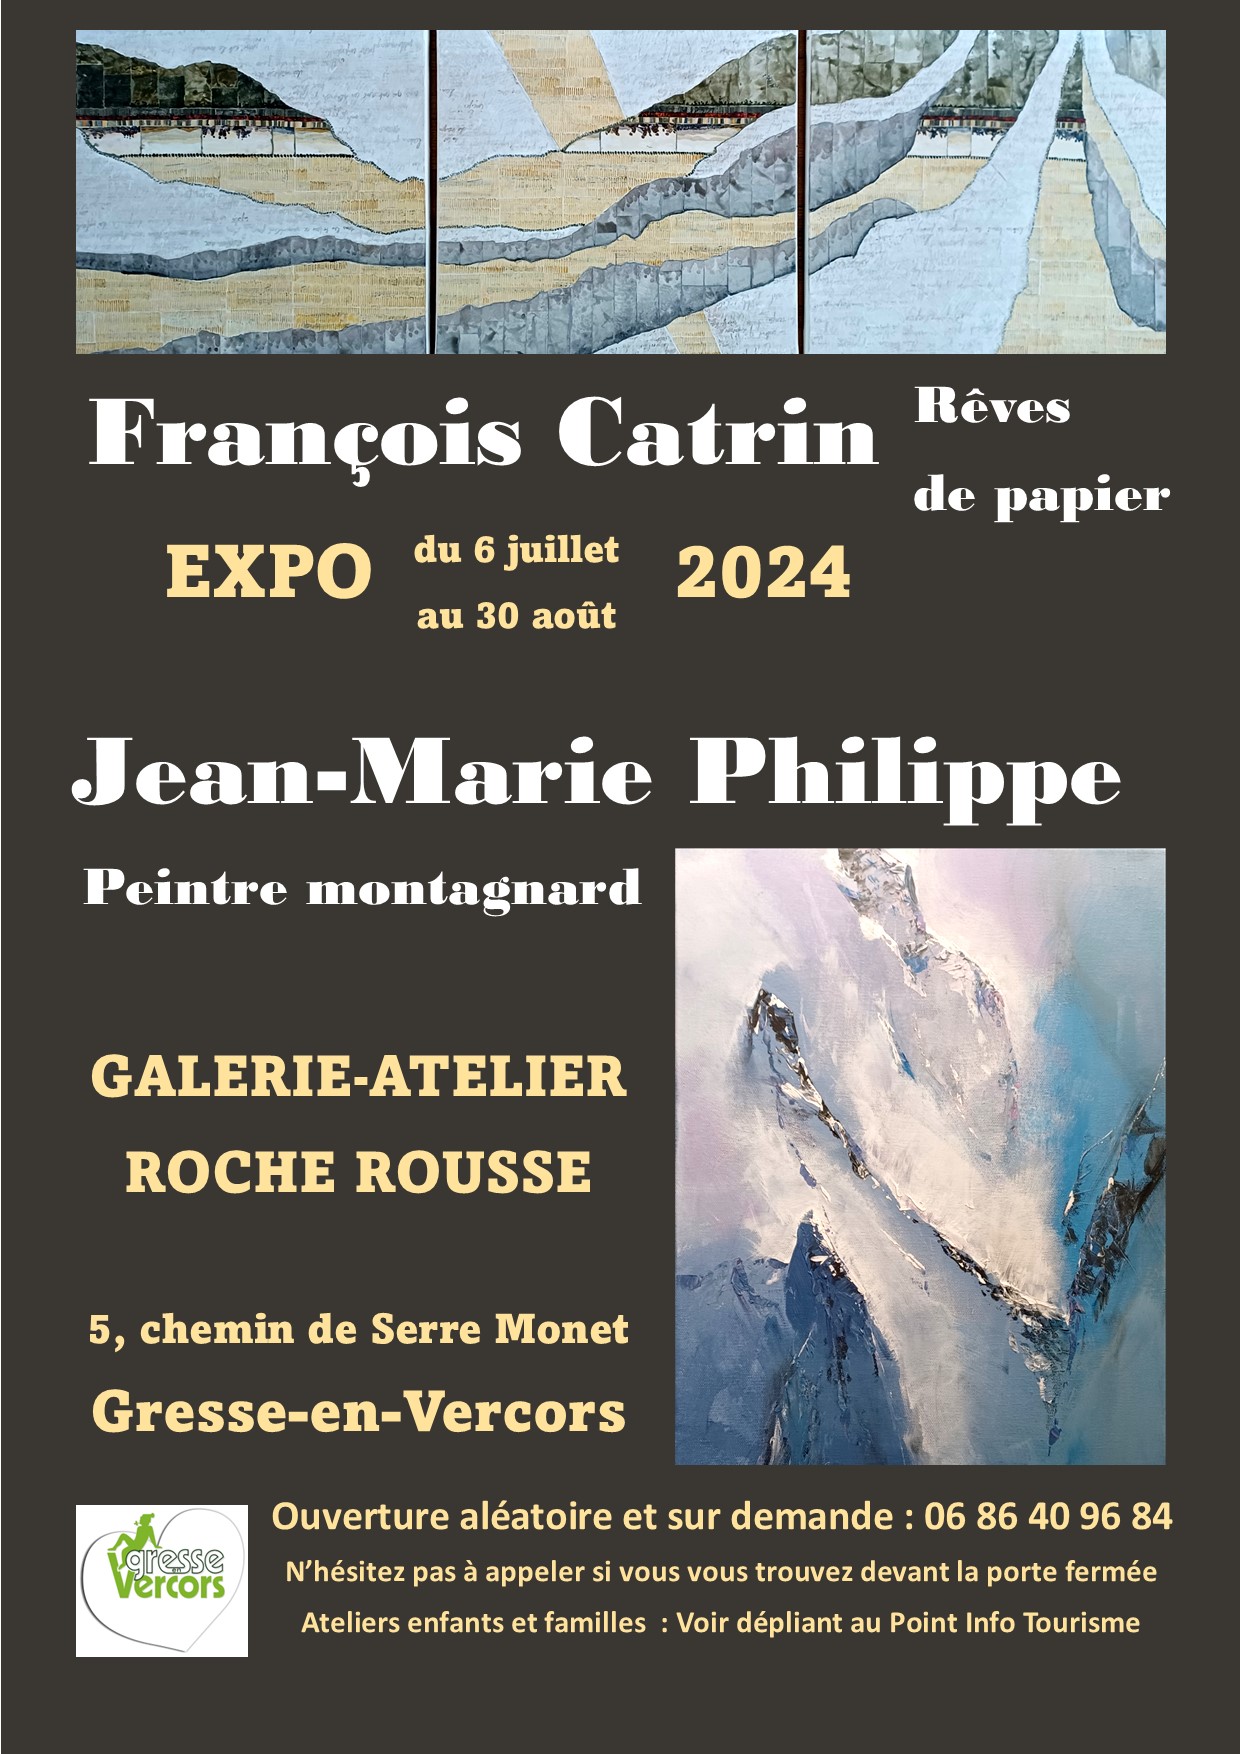 Exposition de François Cathrin